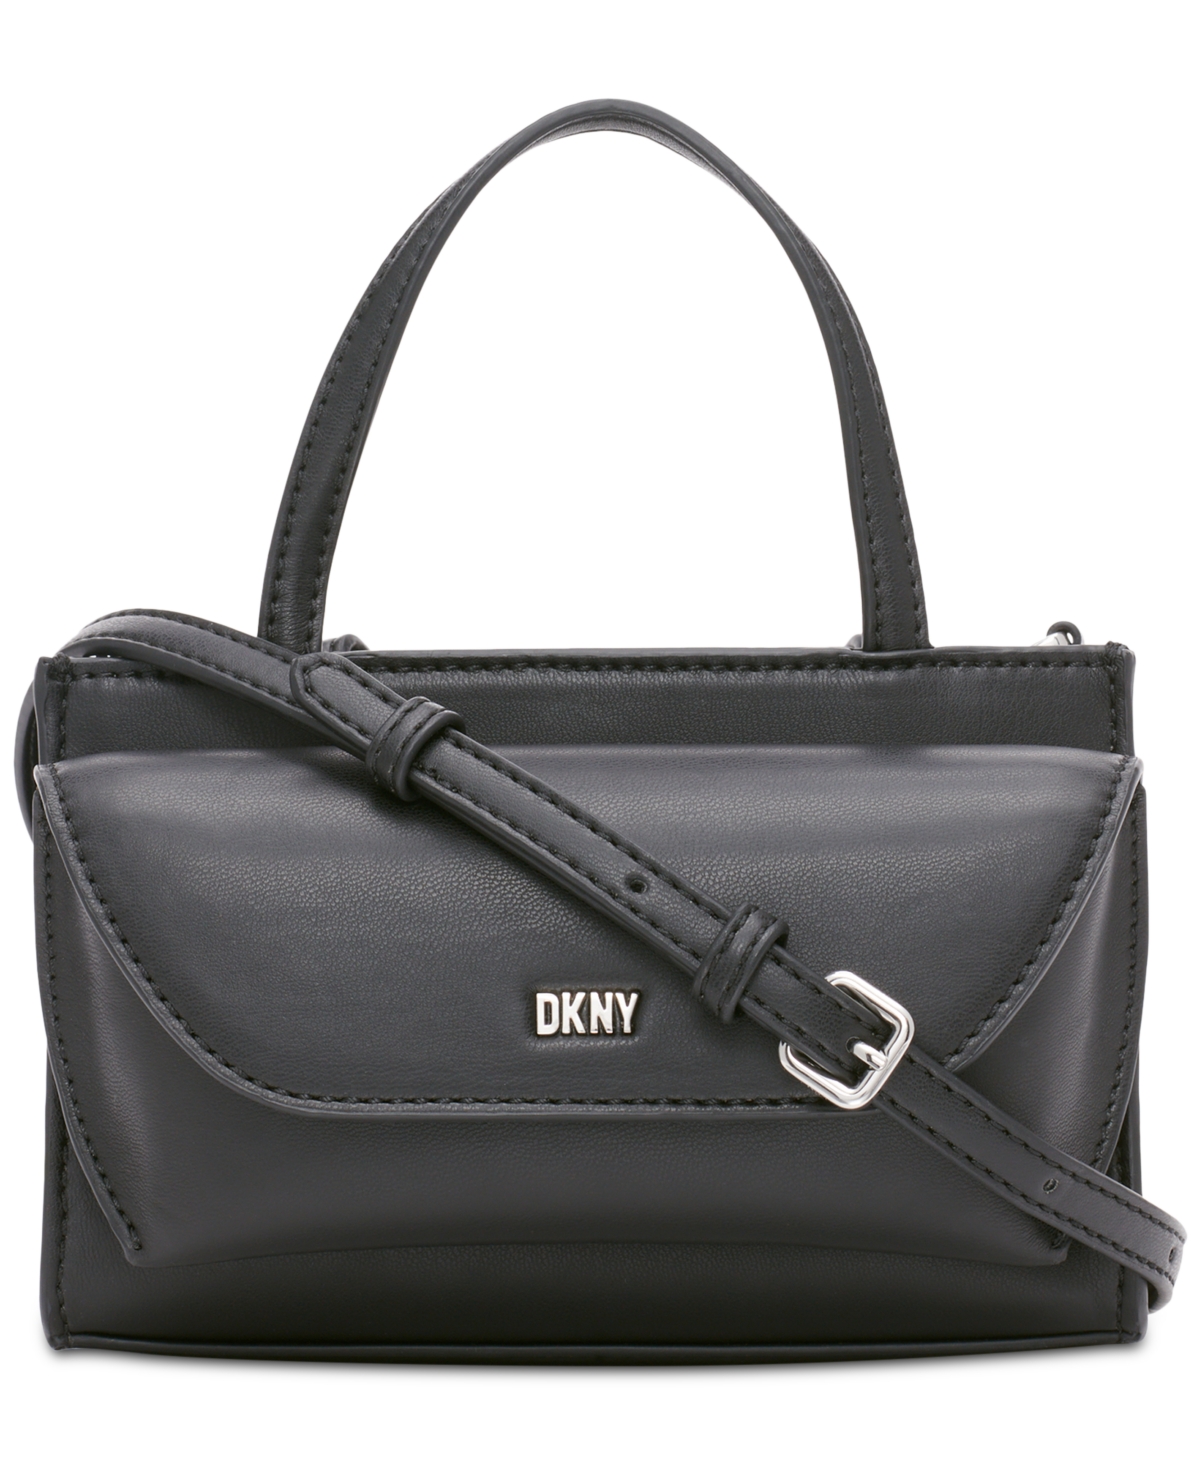 Dkny Jeanne Small Crossbody Bag In Black/silver